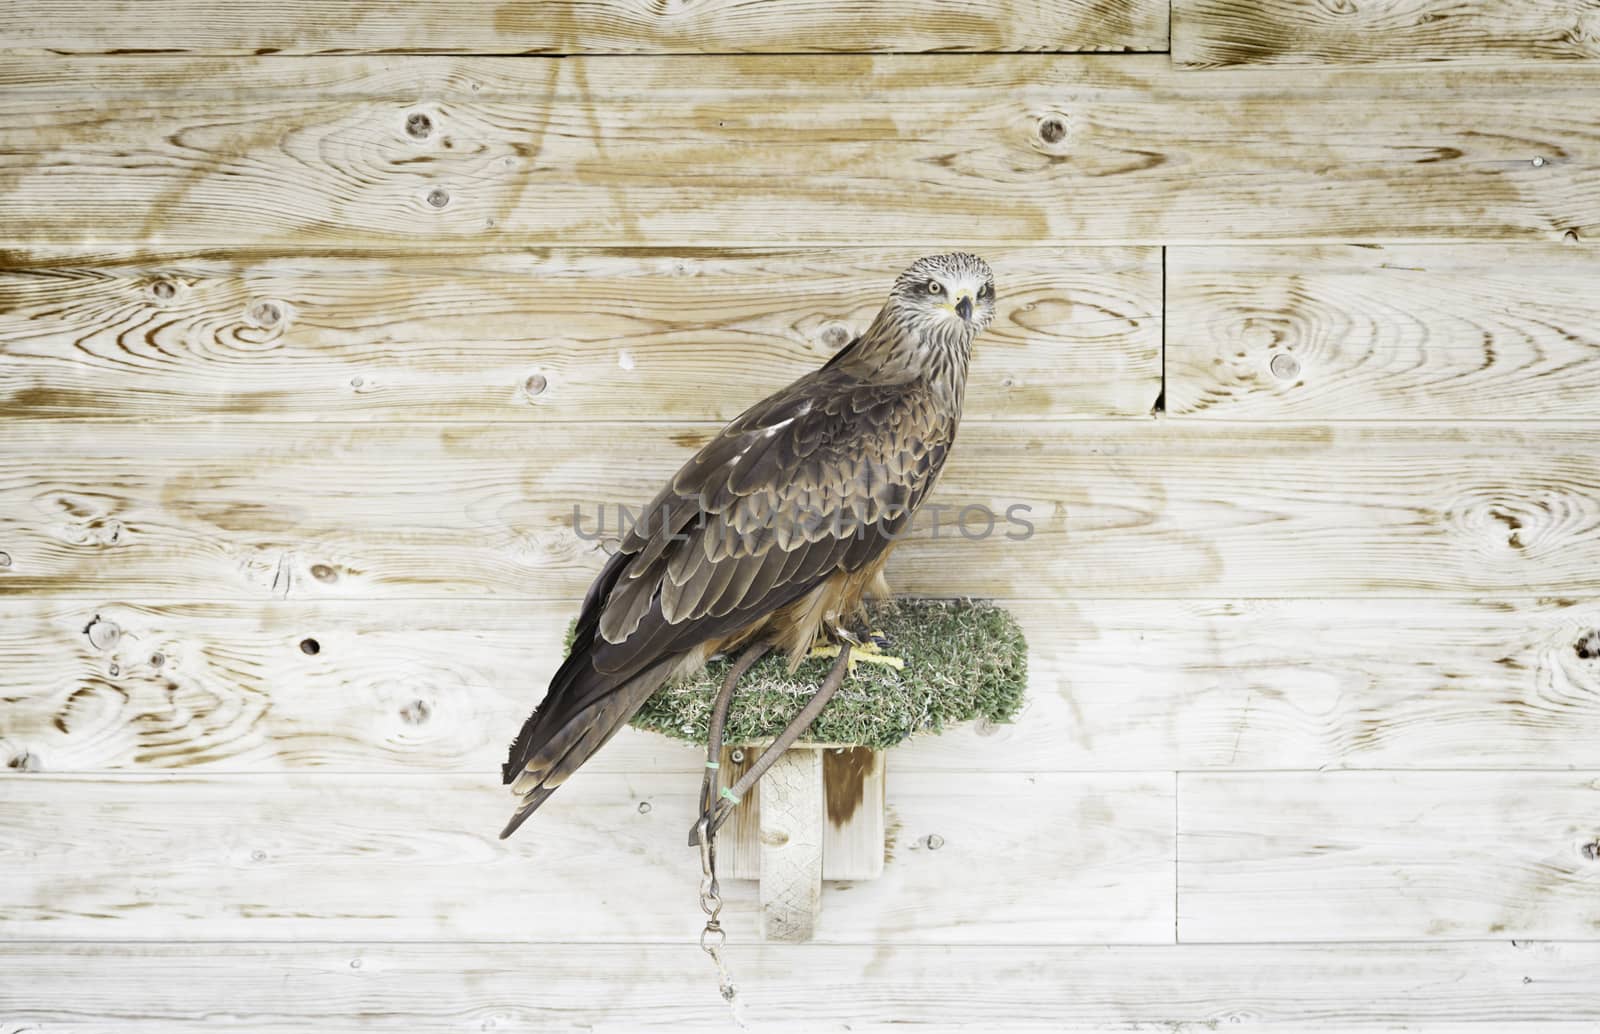 Captive eagle falconry, detail from a wild bird for falconry